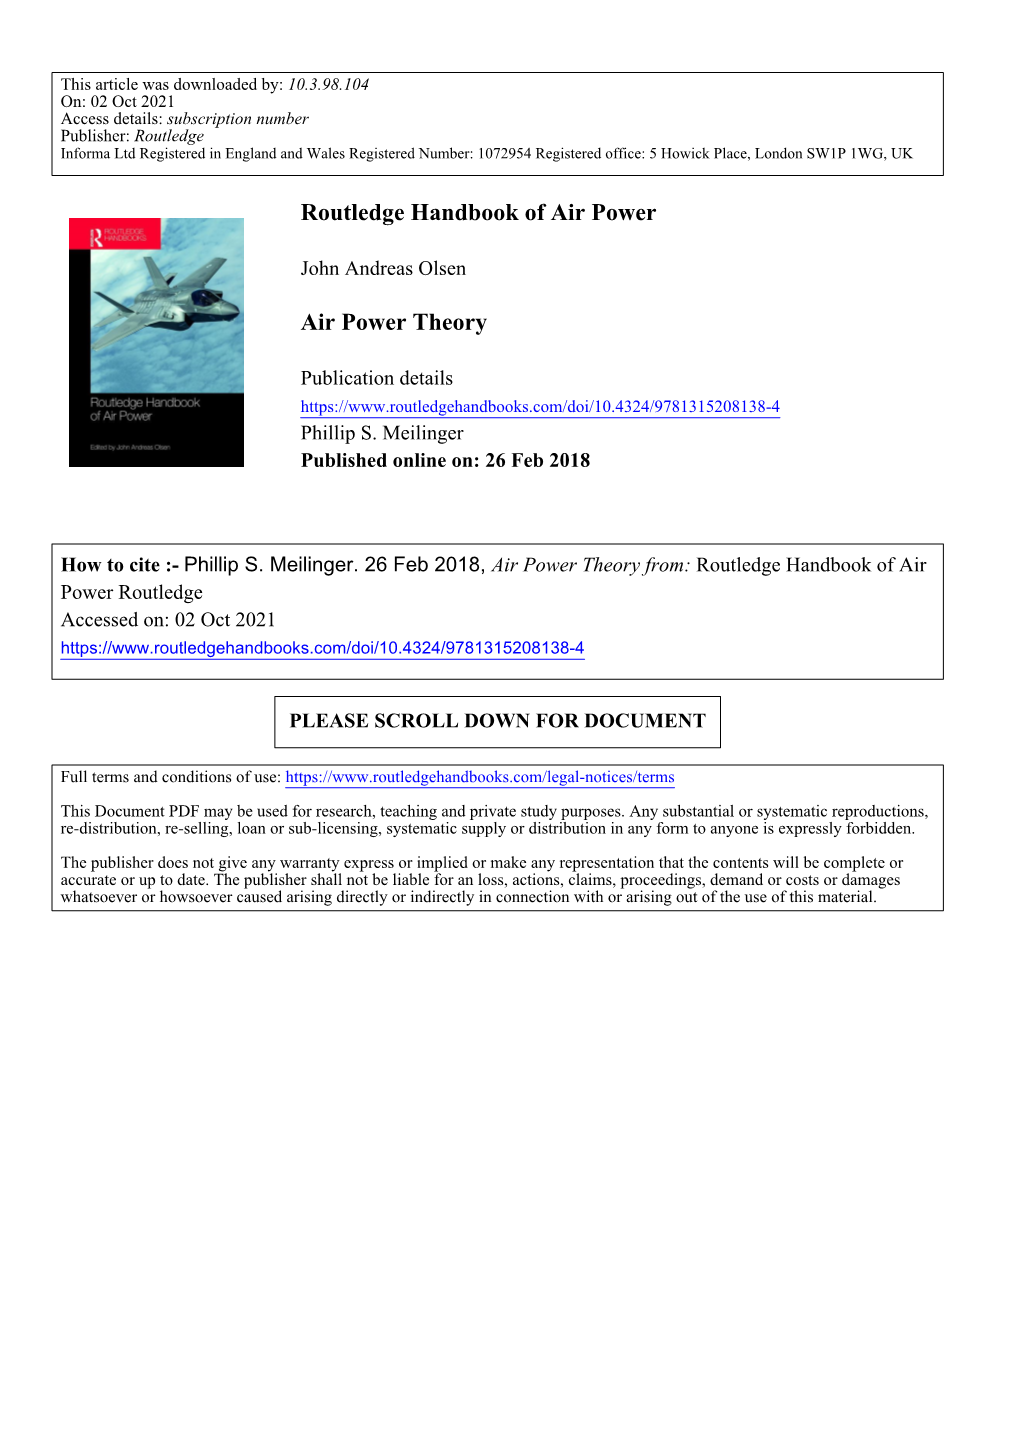 Routledge Handbook of Air Power Air Power Theory